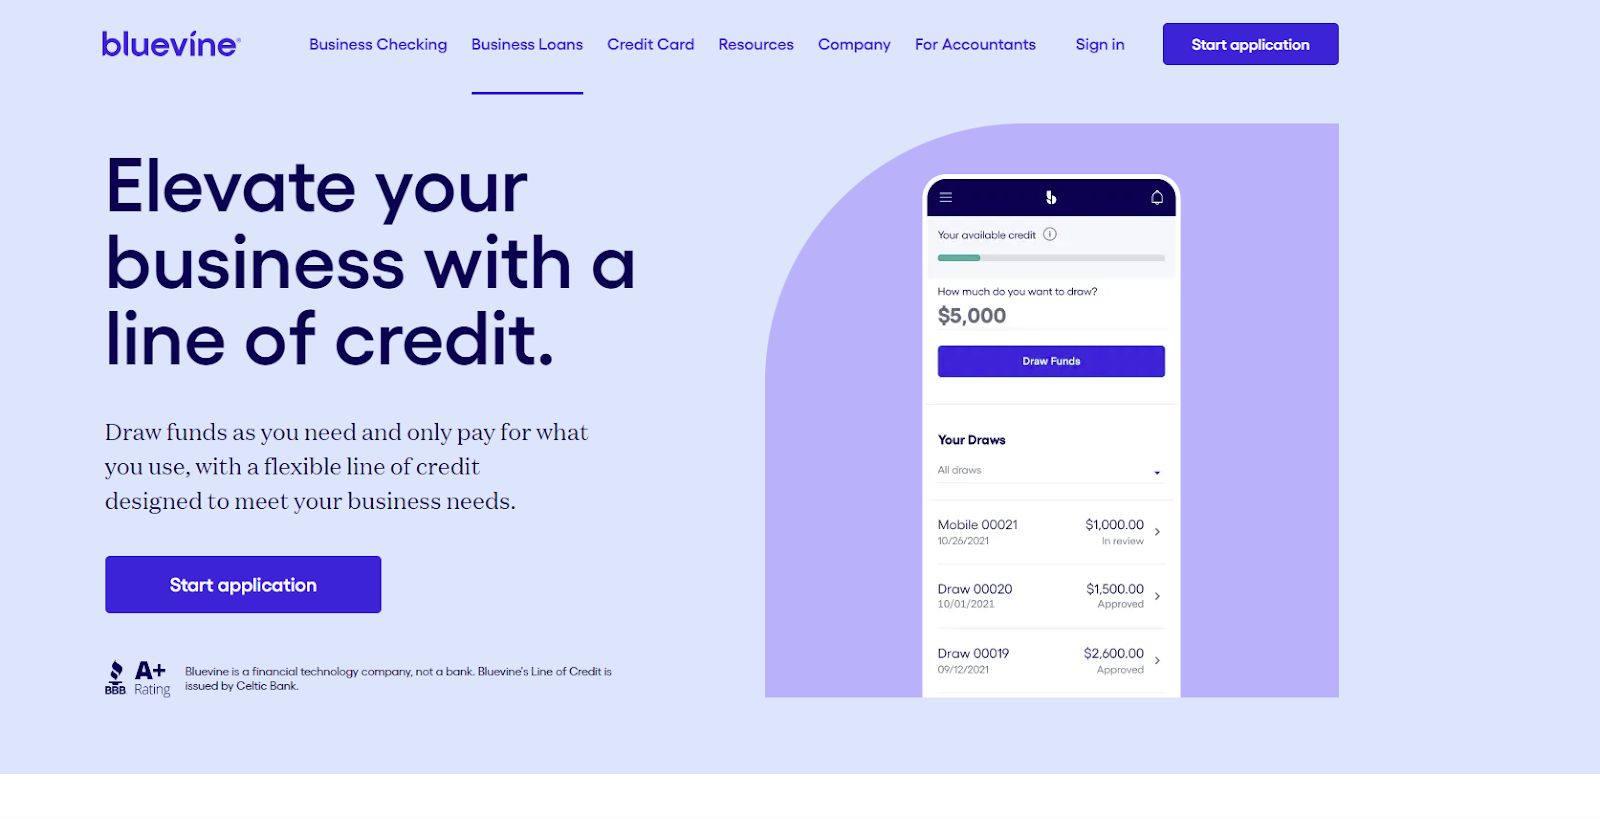 Starting screenshot of Bluevine business line of credit application